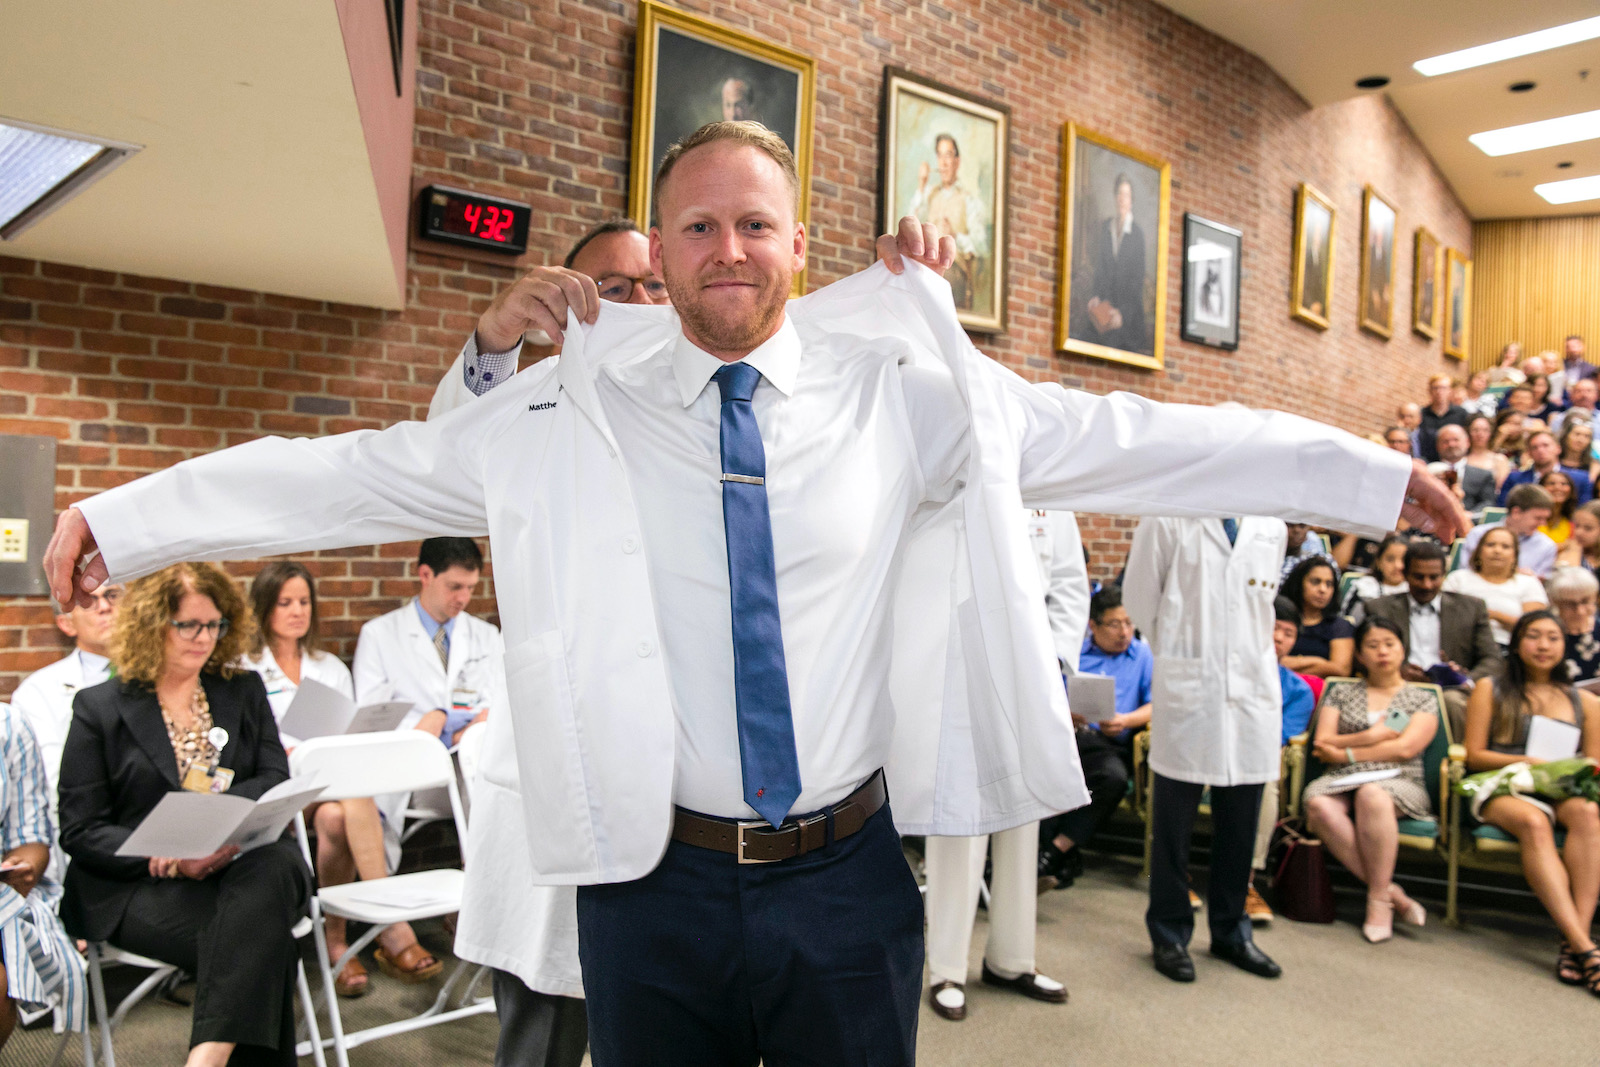 White Coat Ceremony at Vanderbilt University School of Medicine.